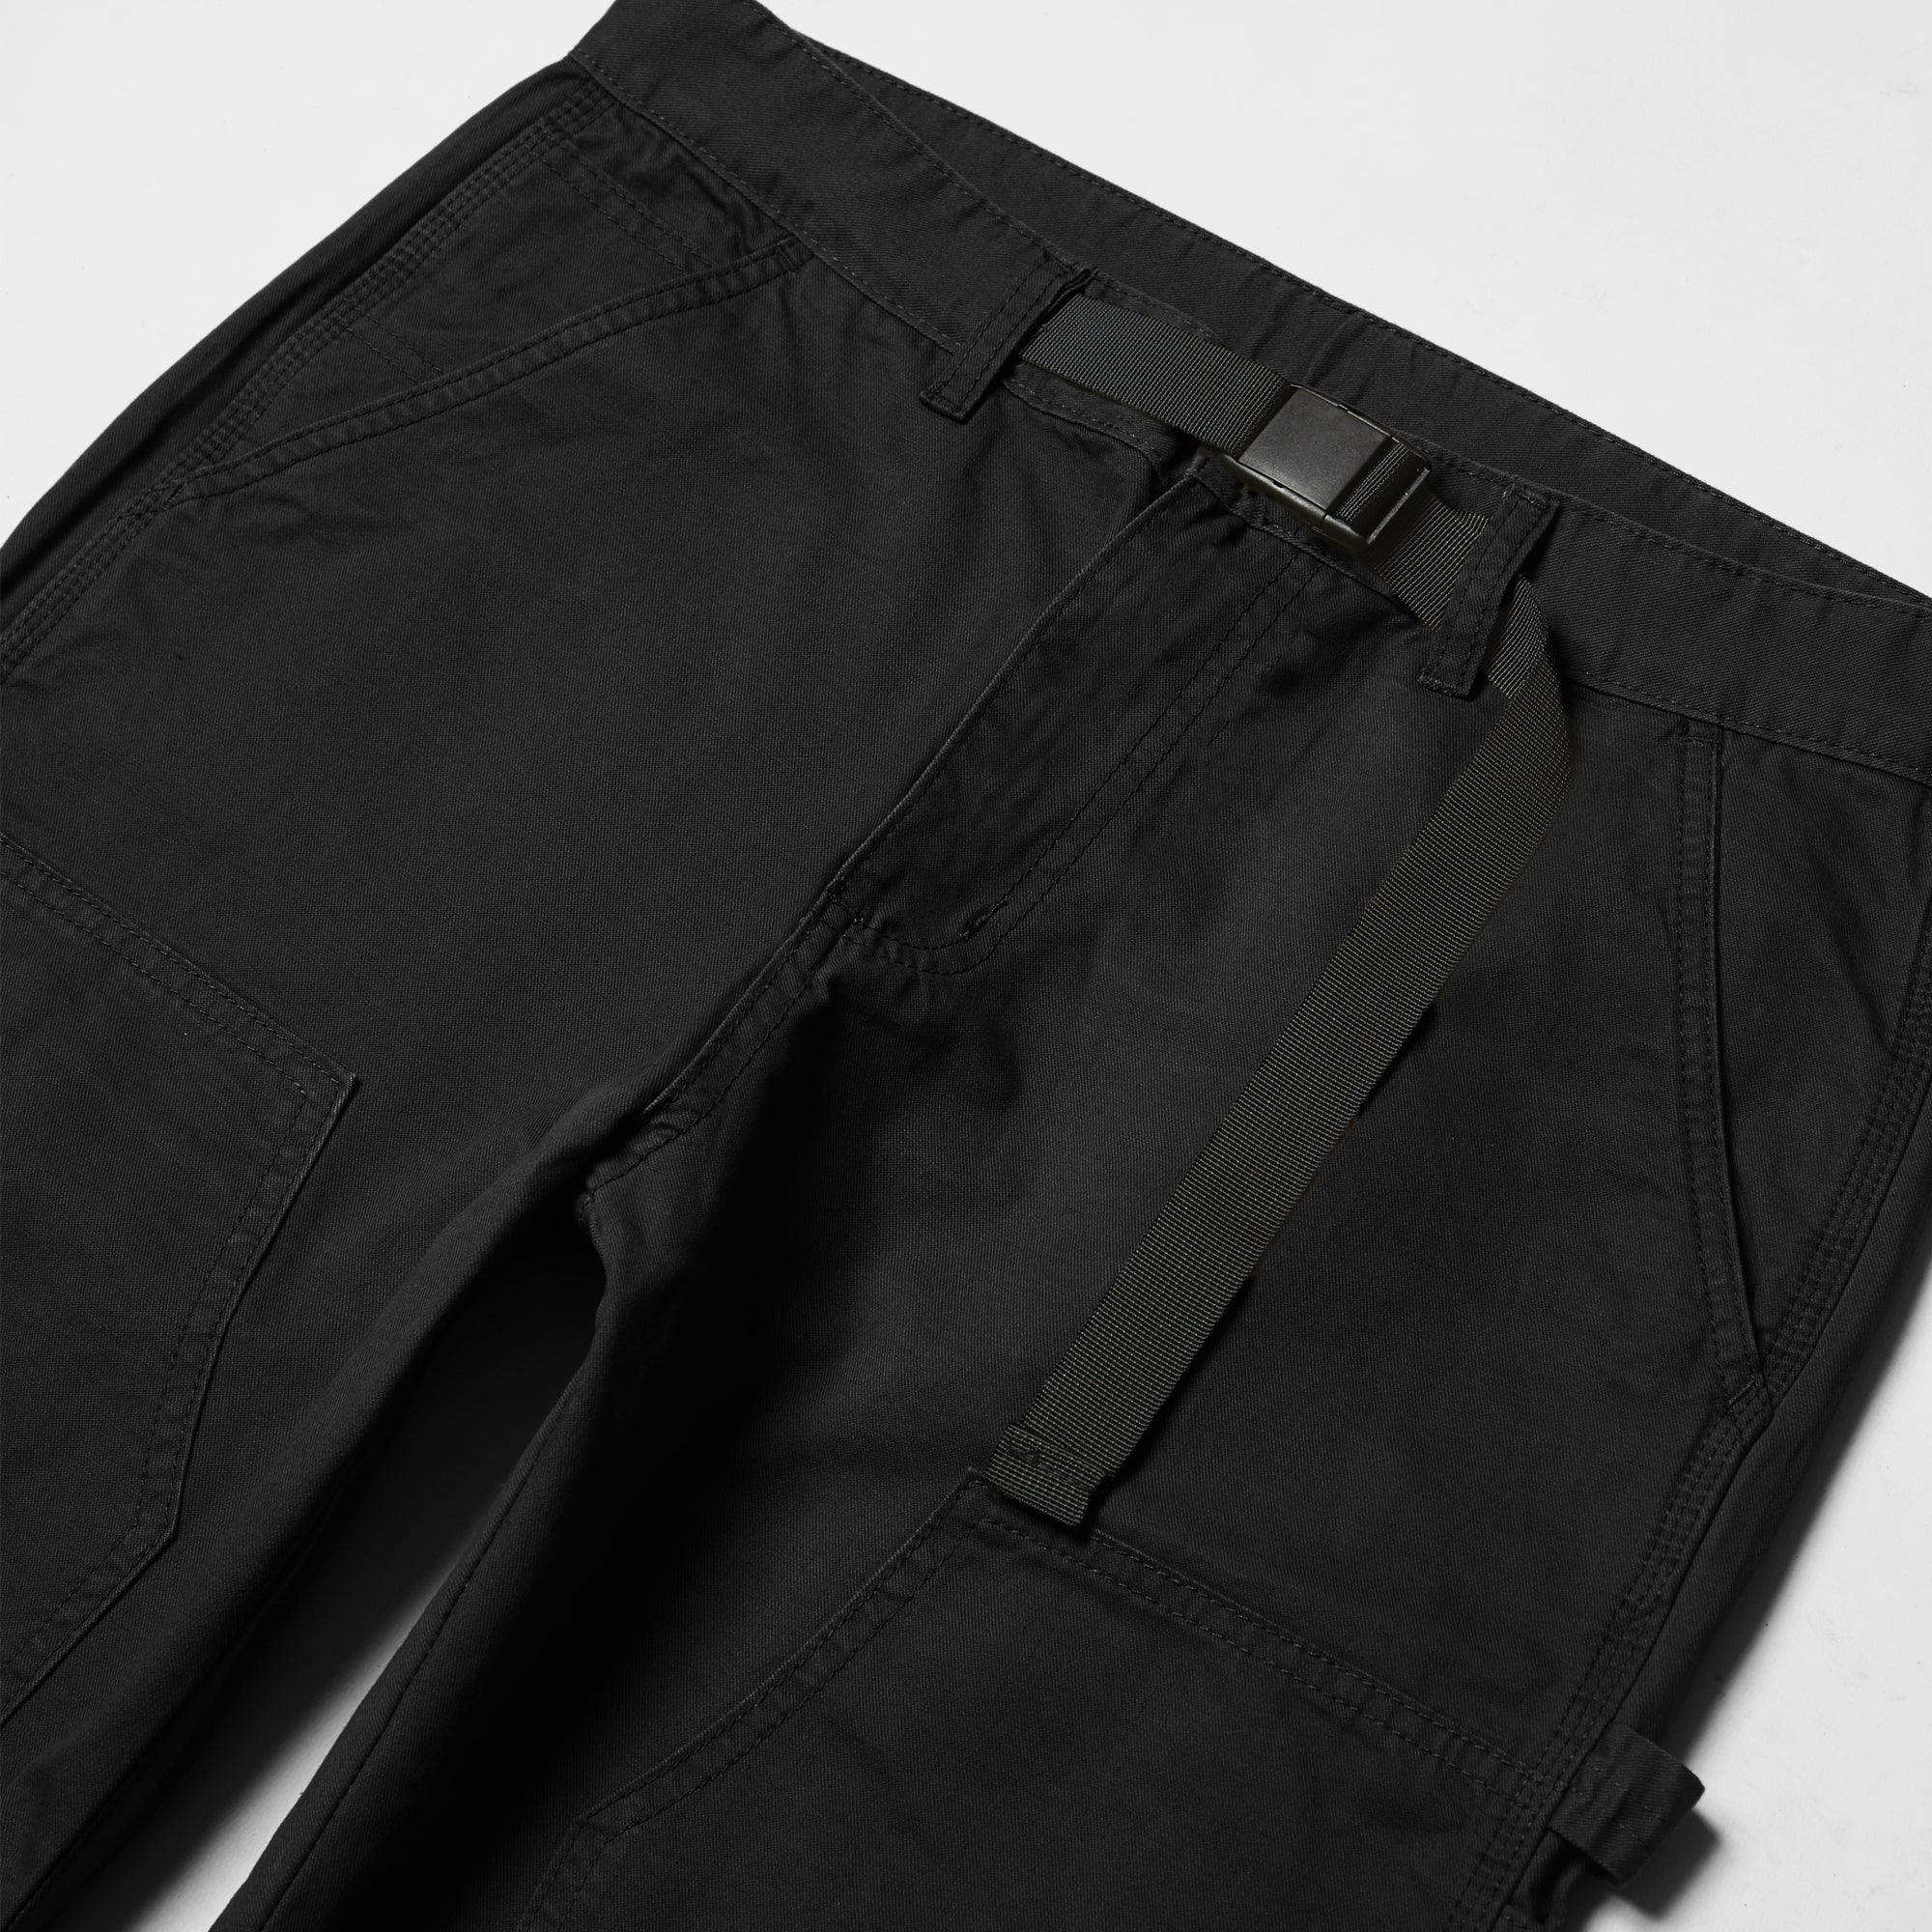 Blacksmith - Double Knee Carpenter Pants - Black